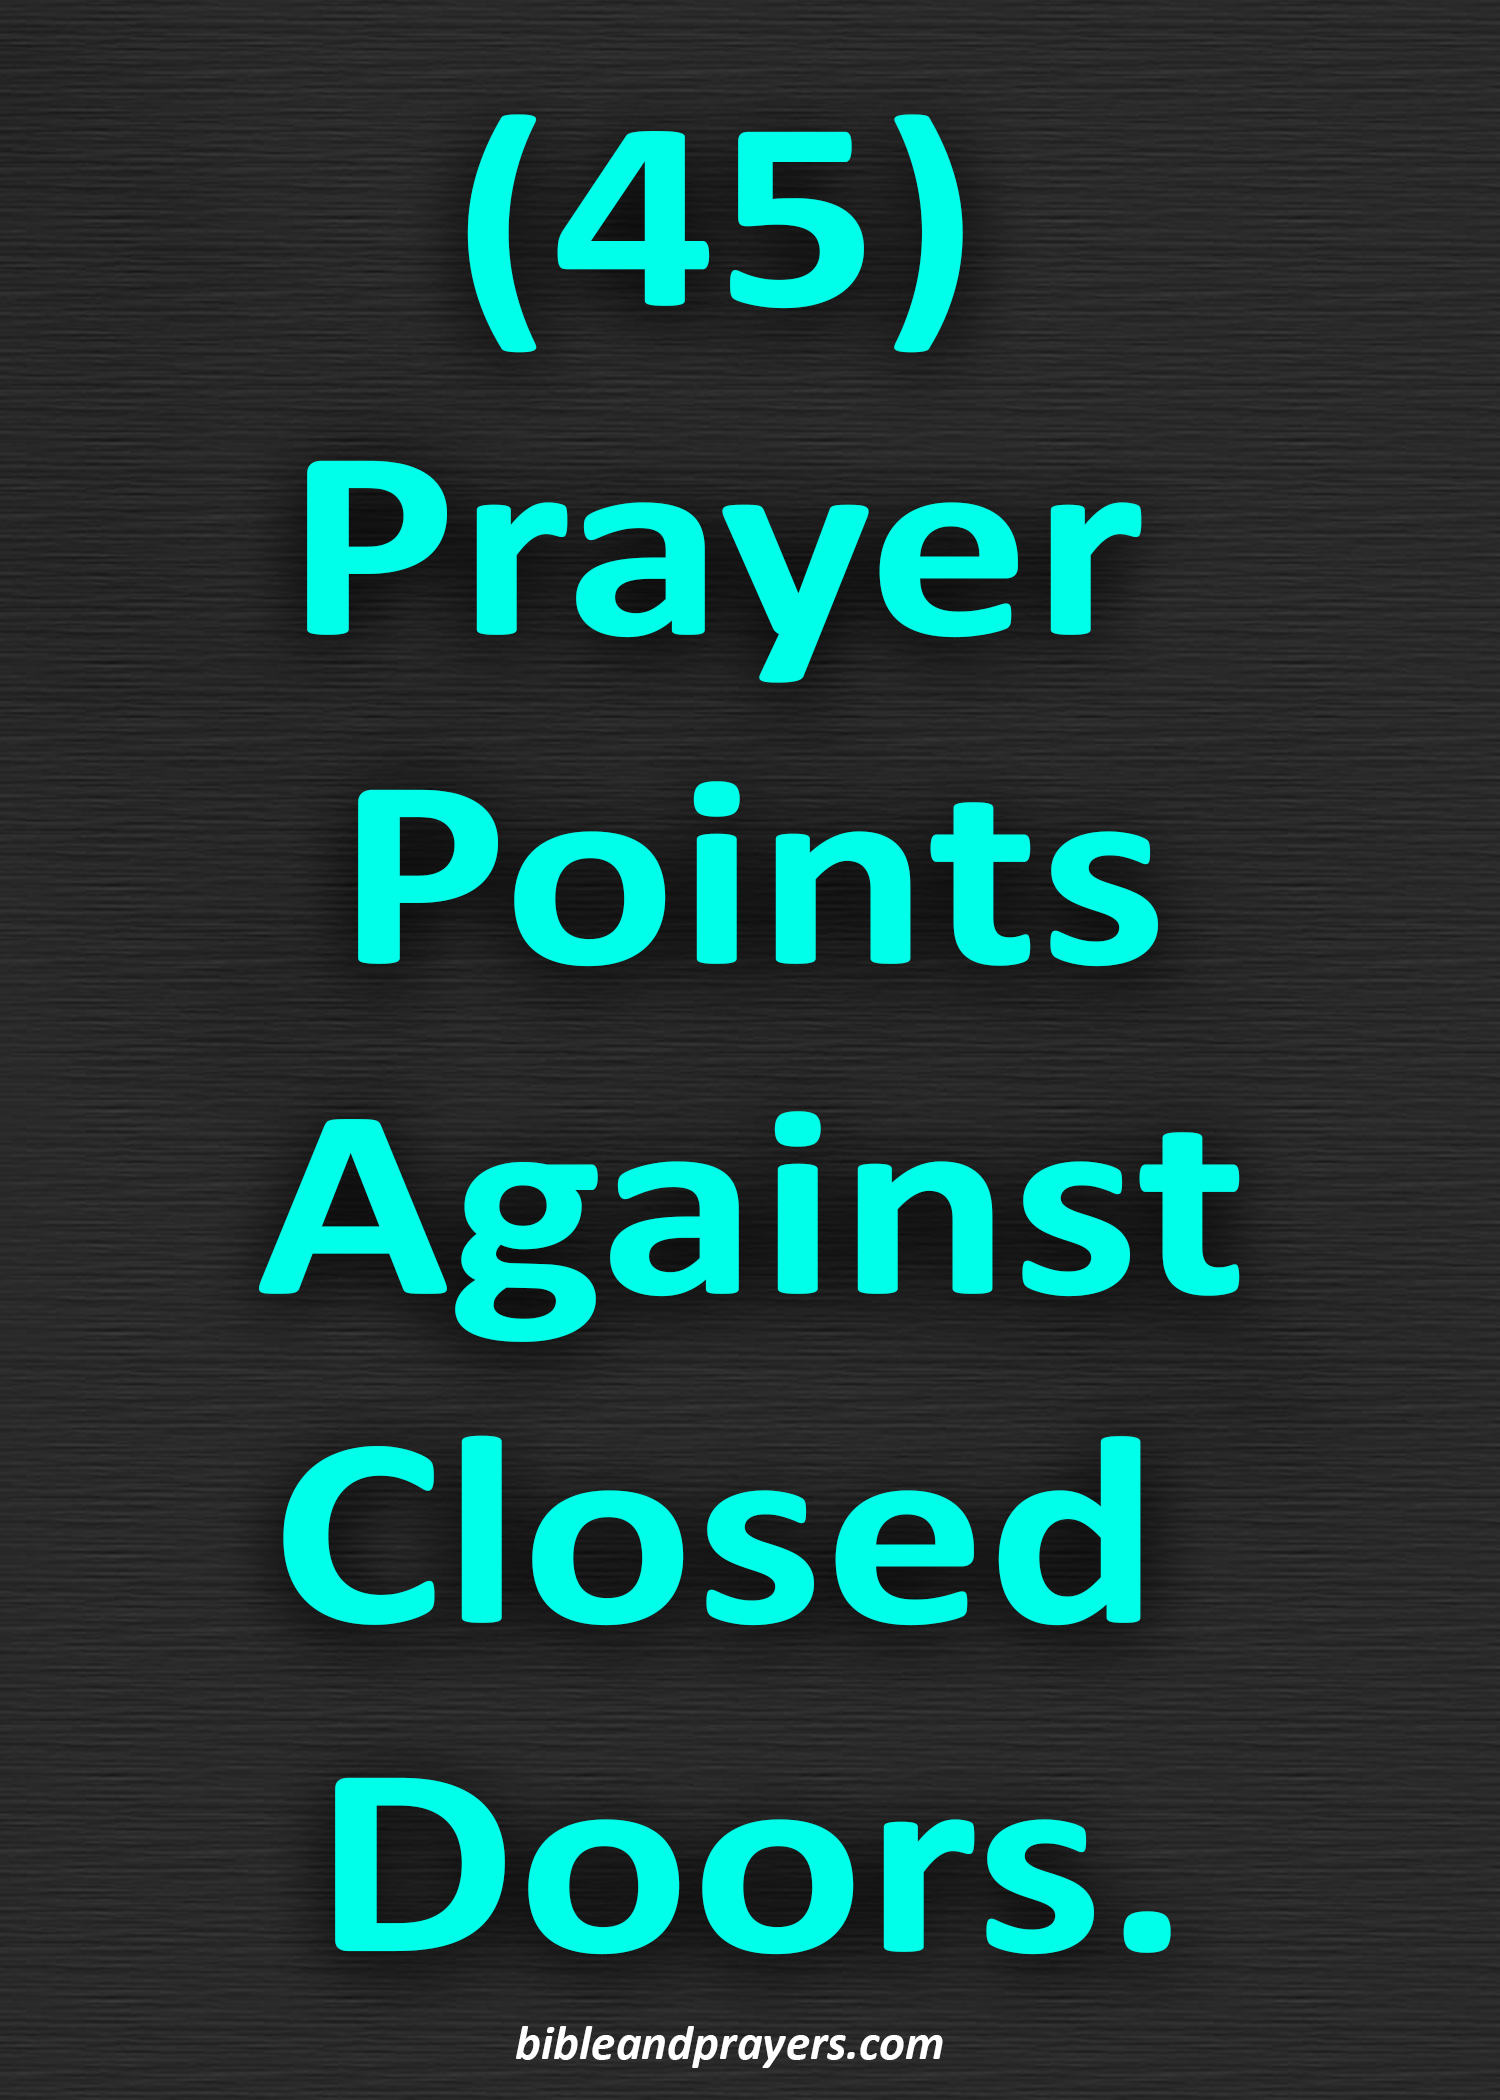 45 Prayer Points Against Closed Doors.